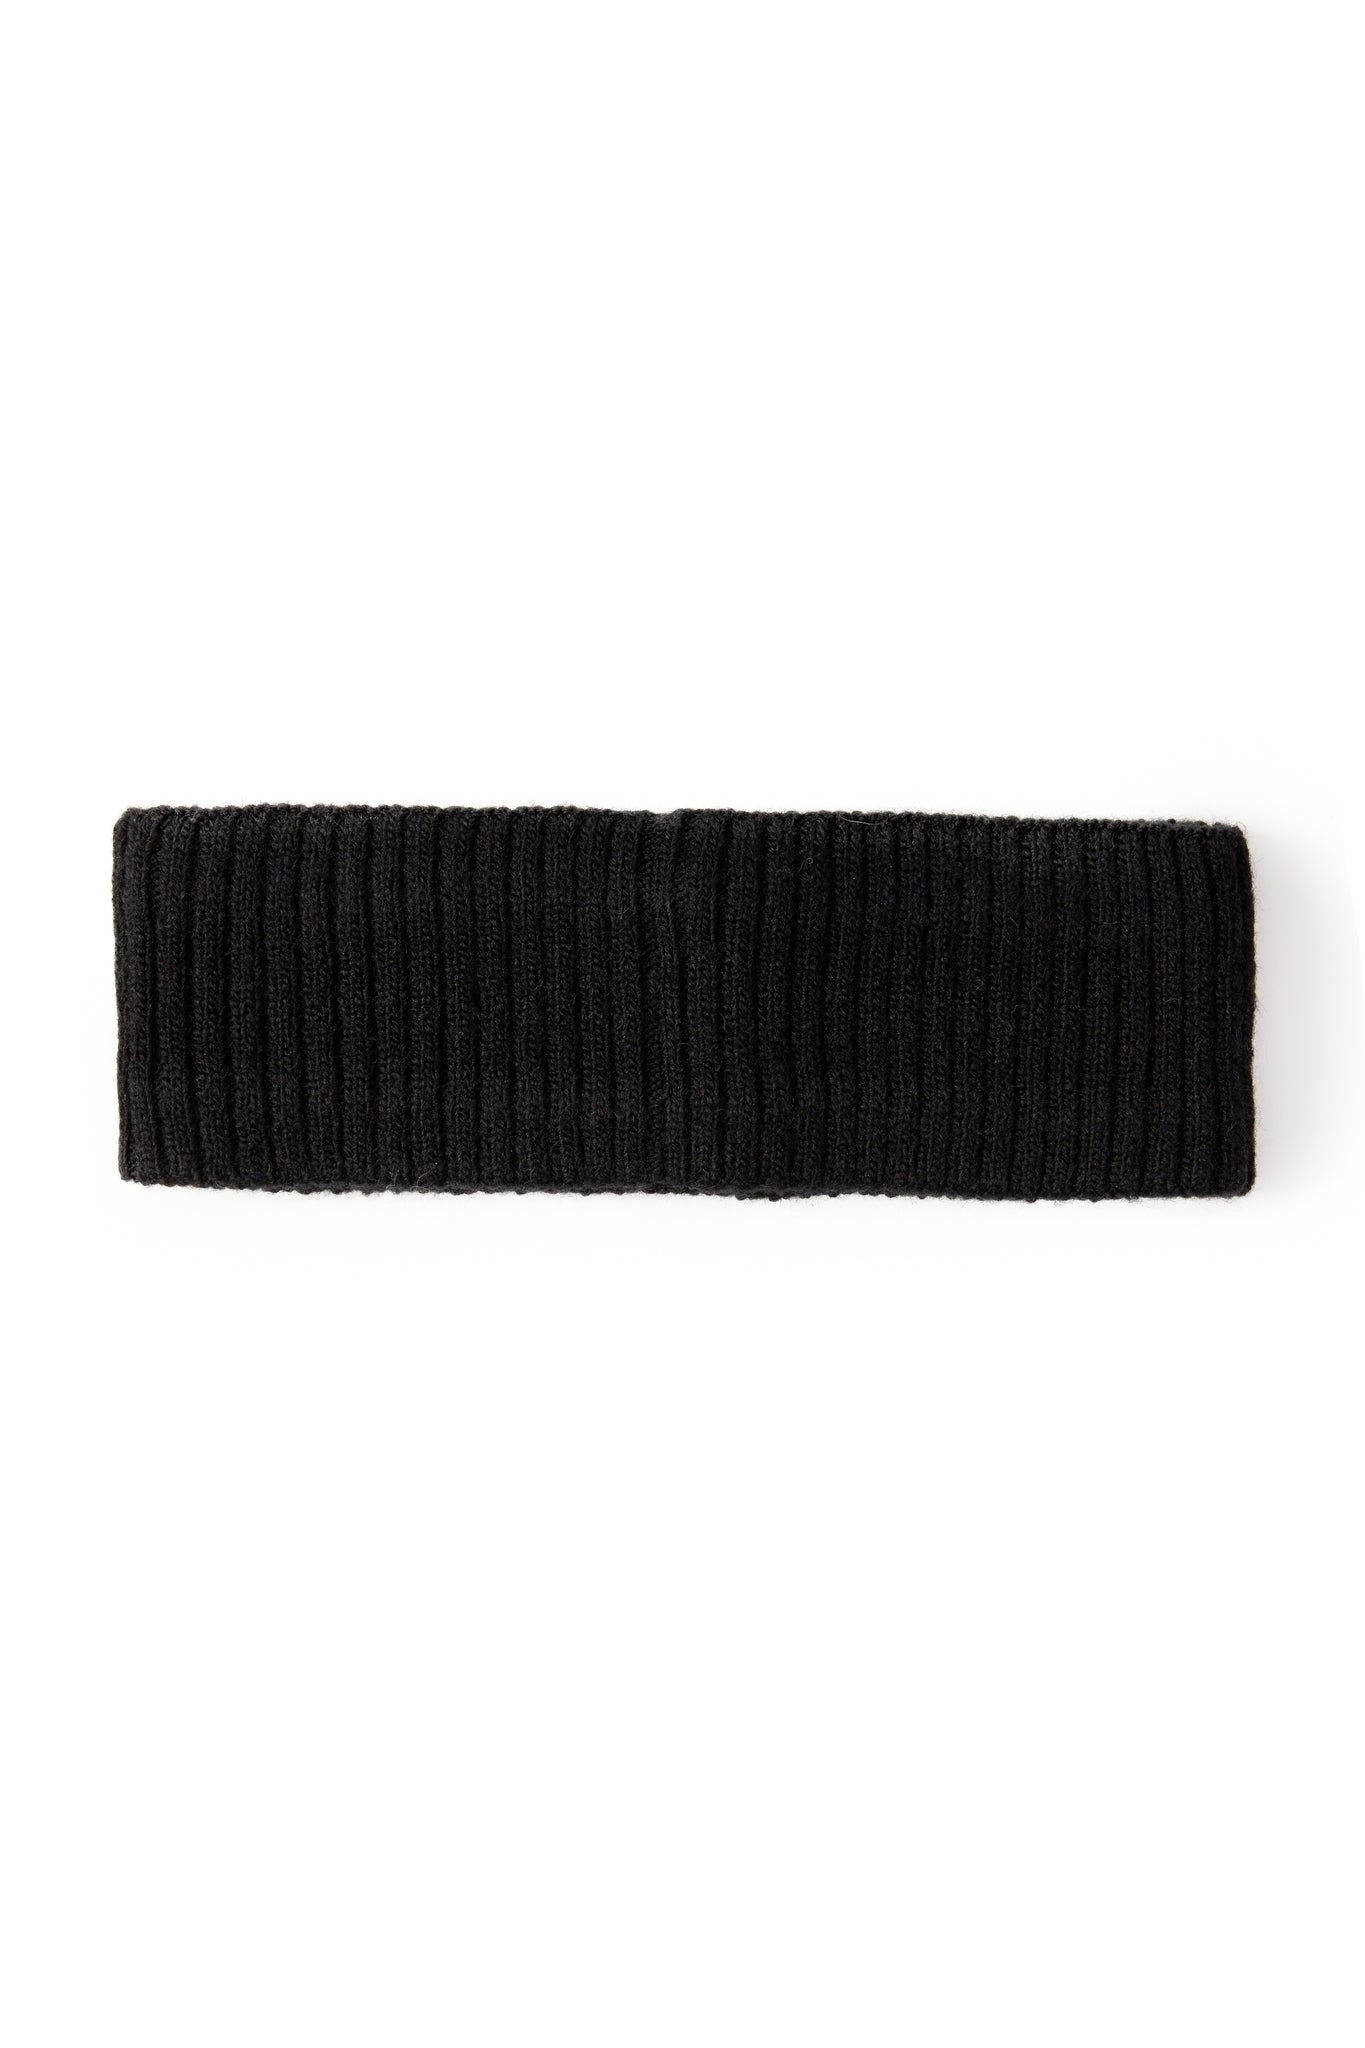 Burghley Headband (Black)